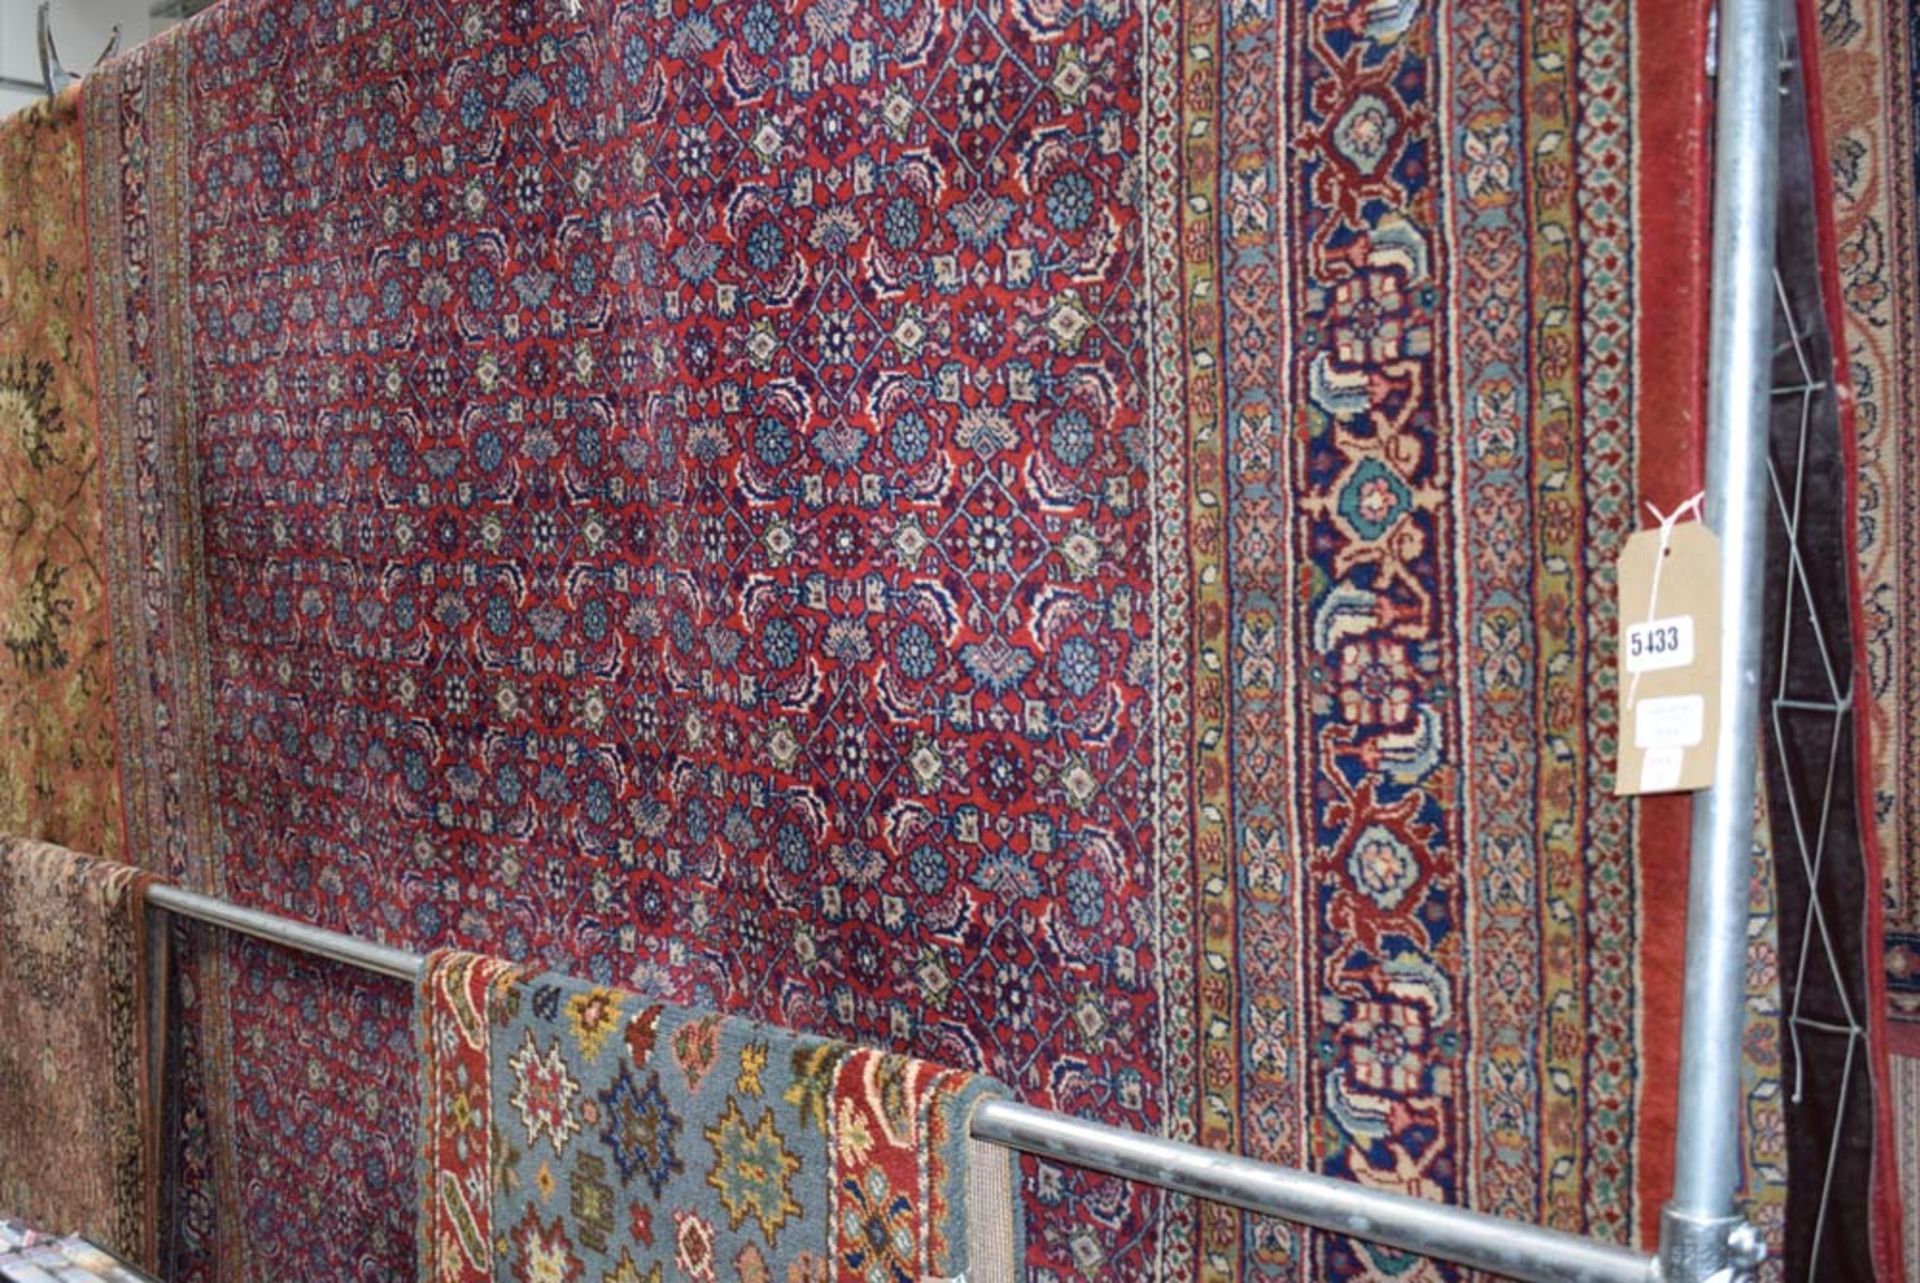 (16) A large red floral carpet